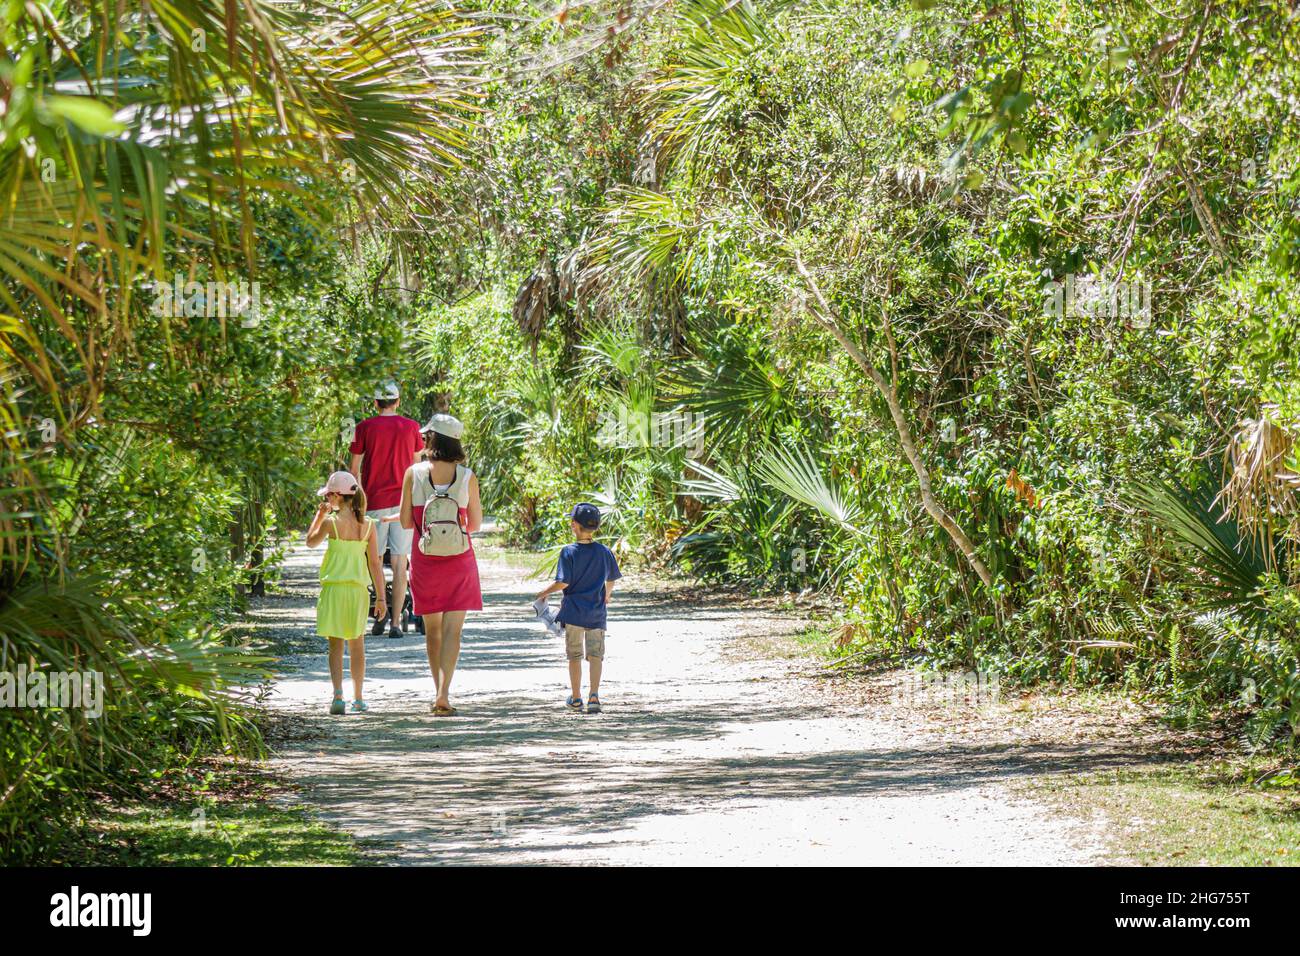 Florida Ochogee Tamiami Trail Everglades,Big Cypress National Preserve,man men male père,femme femme femme femme mère,garçon garçons mâle enfant enfants chil Banque D'Images